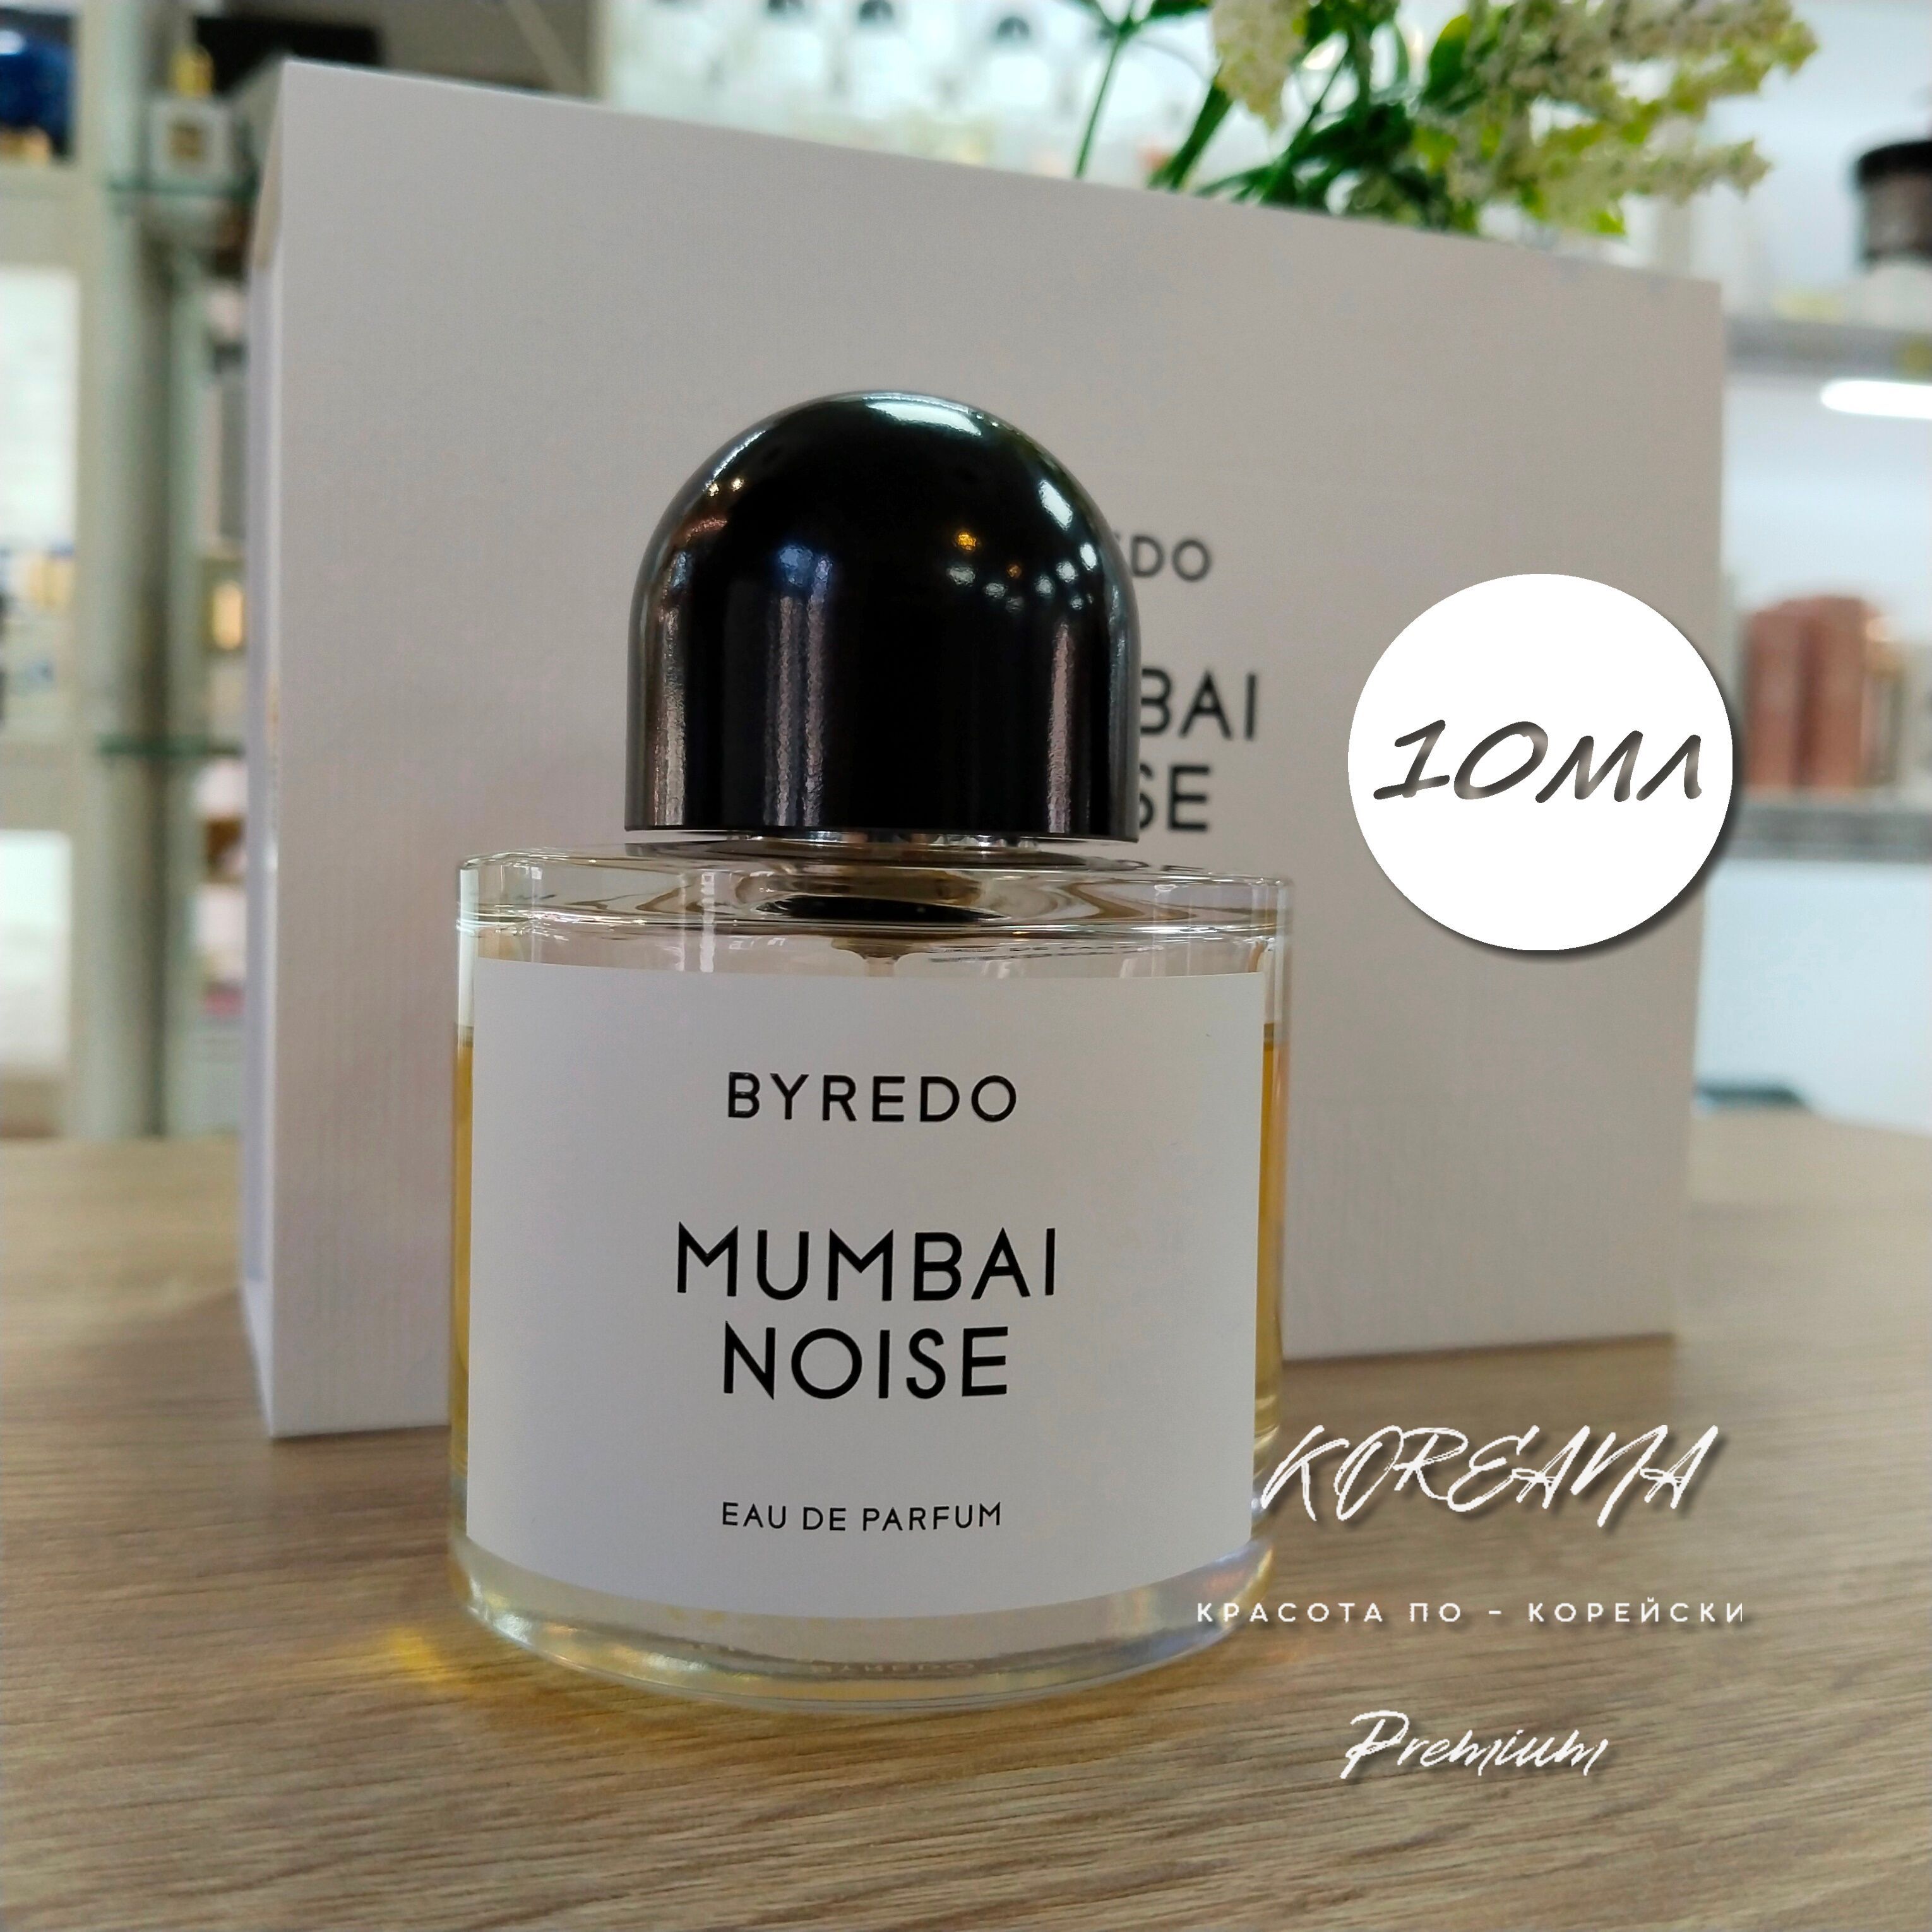 Mumbai Noise Byredo описание аромата фото. Mumbai Noise Byredo описание аромата фото что входит в состав данного аромата.